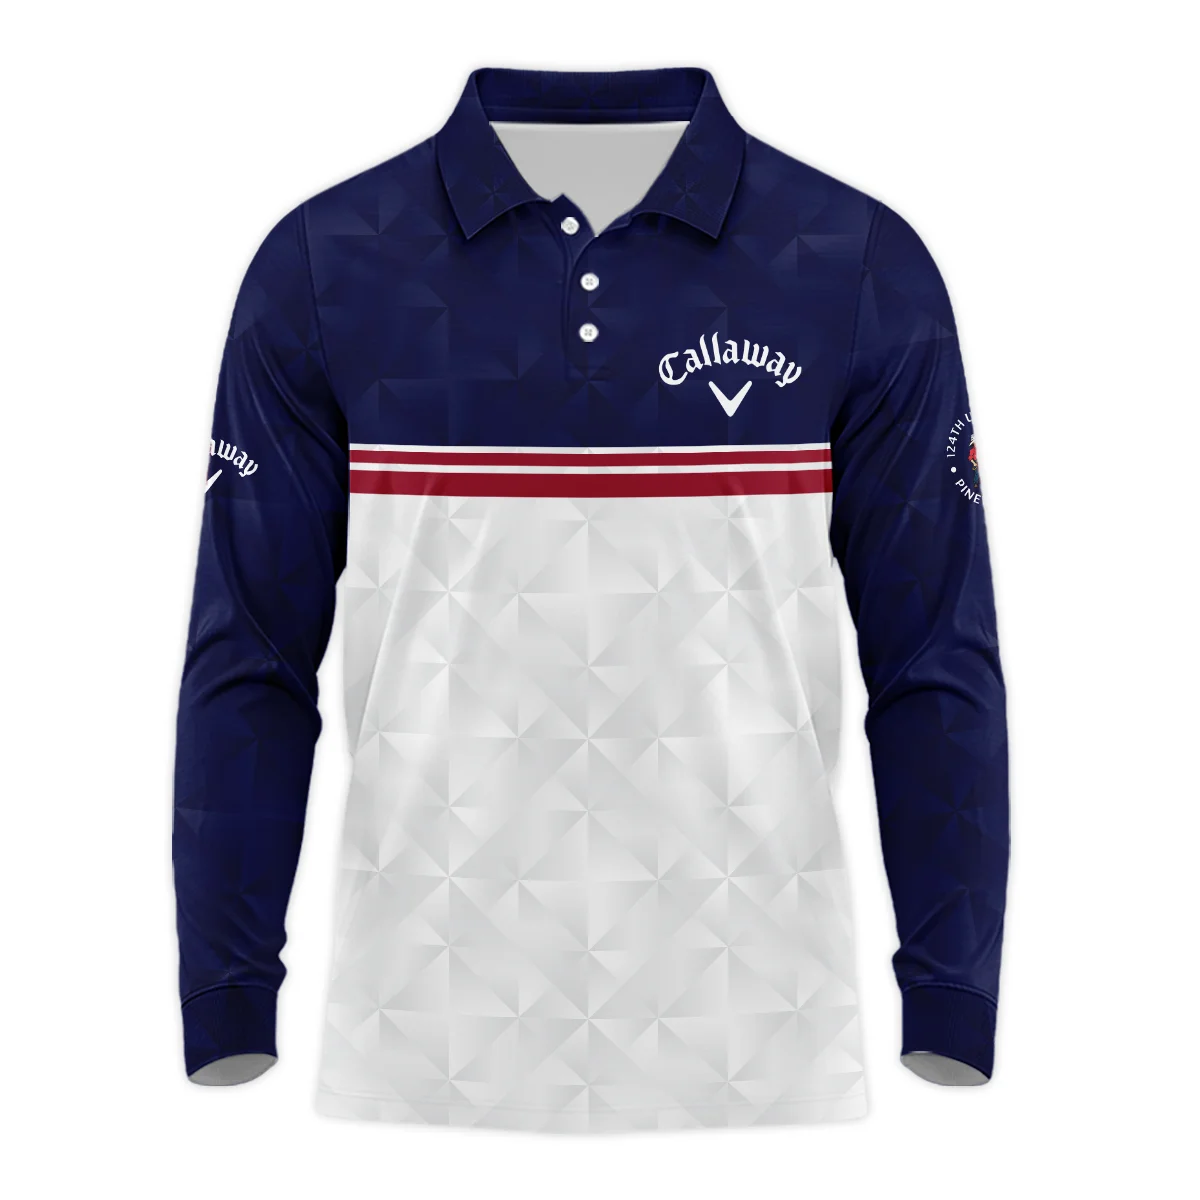 Golf Sport 124th U.S. Open Pinehurst Callaway Long Polo Shirt Dark Blue White Abstract Geometric Triangles All Over Print Long Polo Shirt For Men